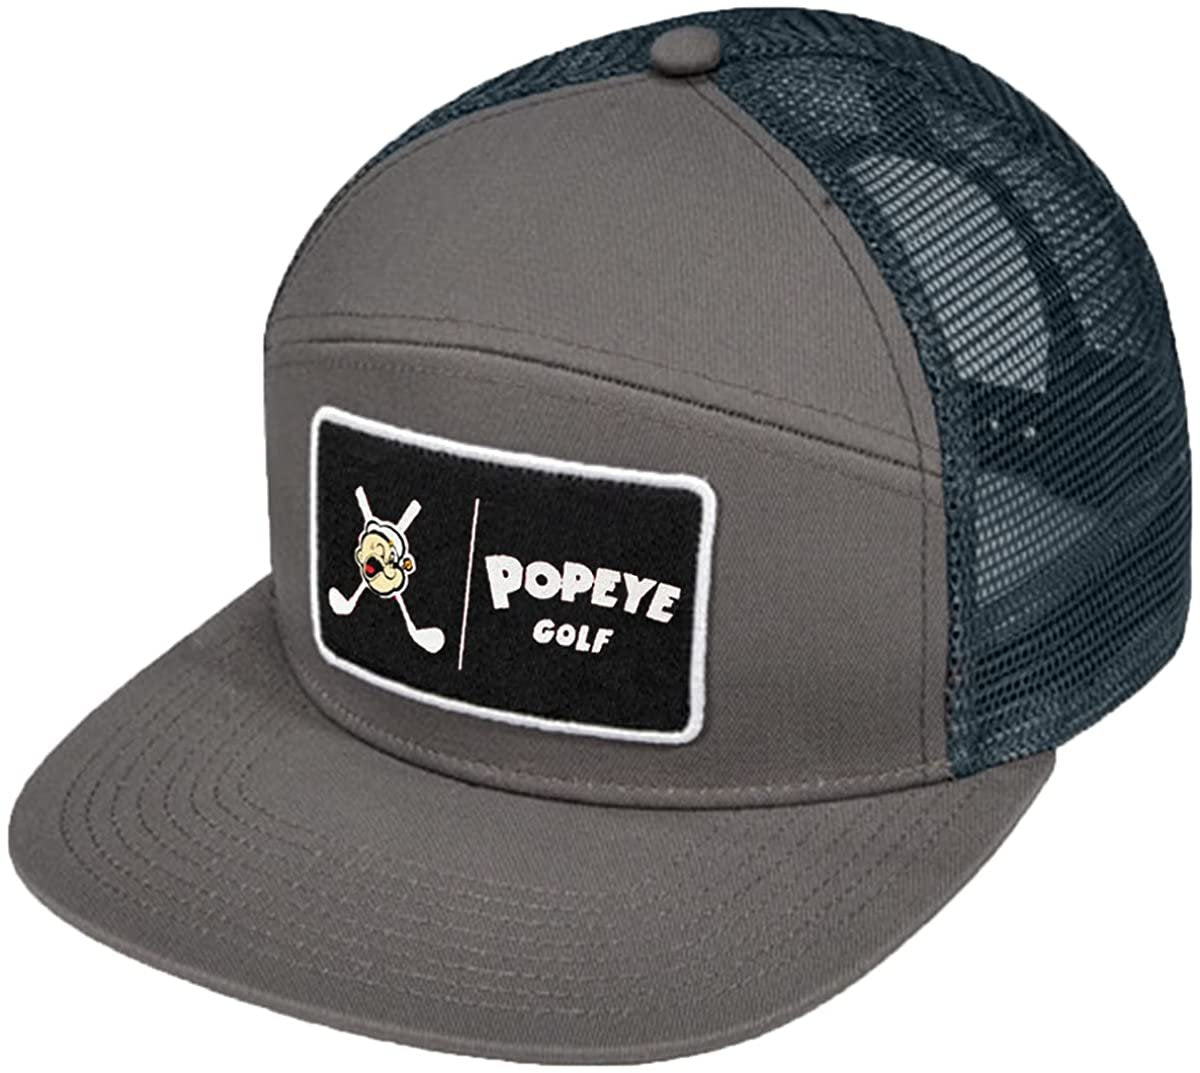 Popeye Golf Tradesman Mesh Adjustable Snapback Trucker Hat